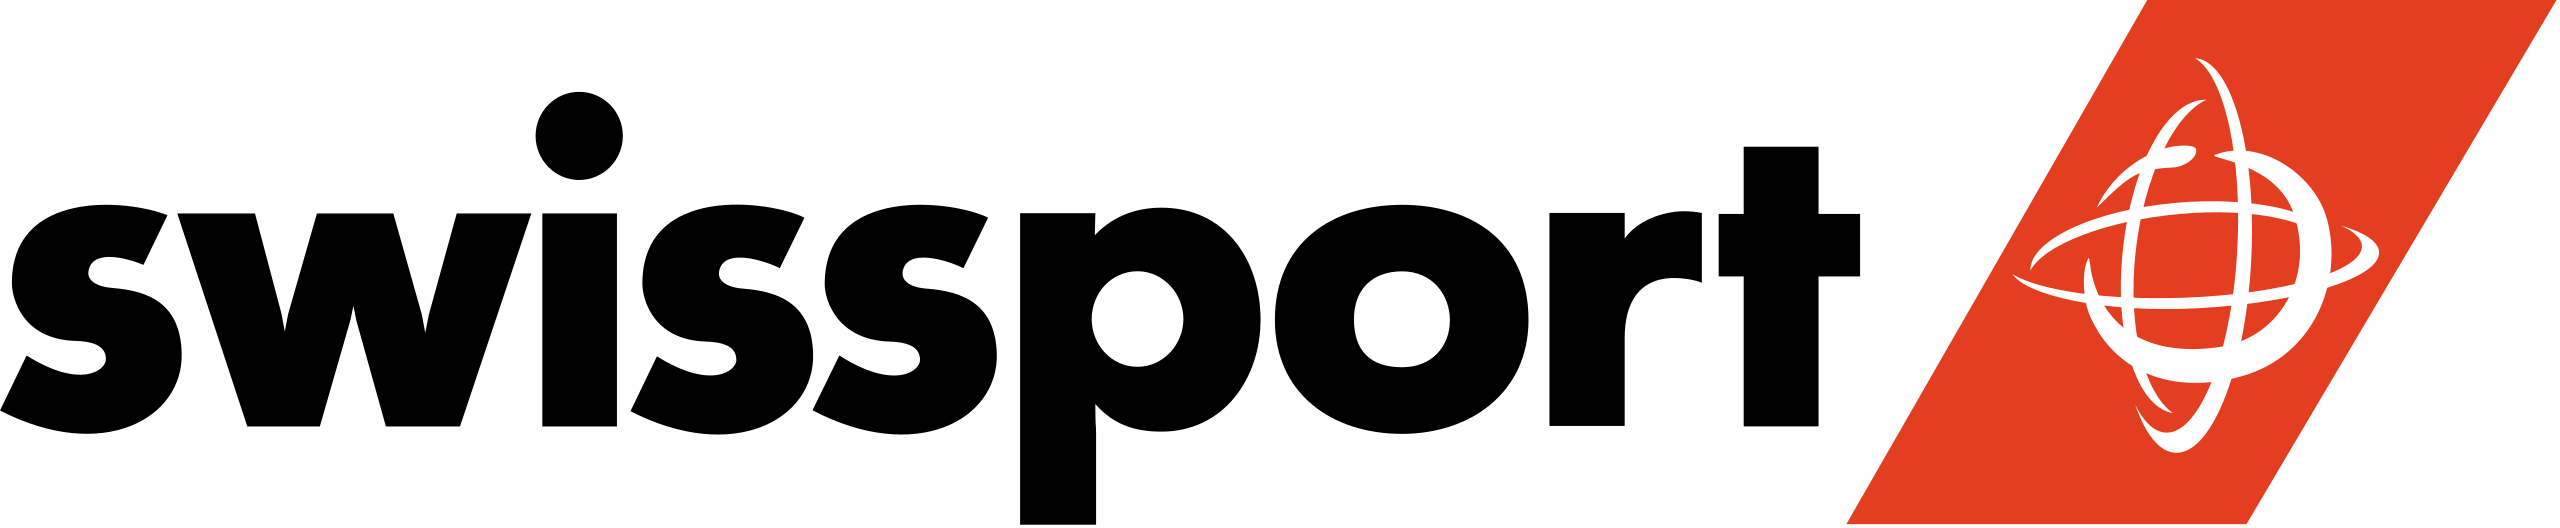 2560px-Swissport_logo.svg